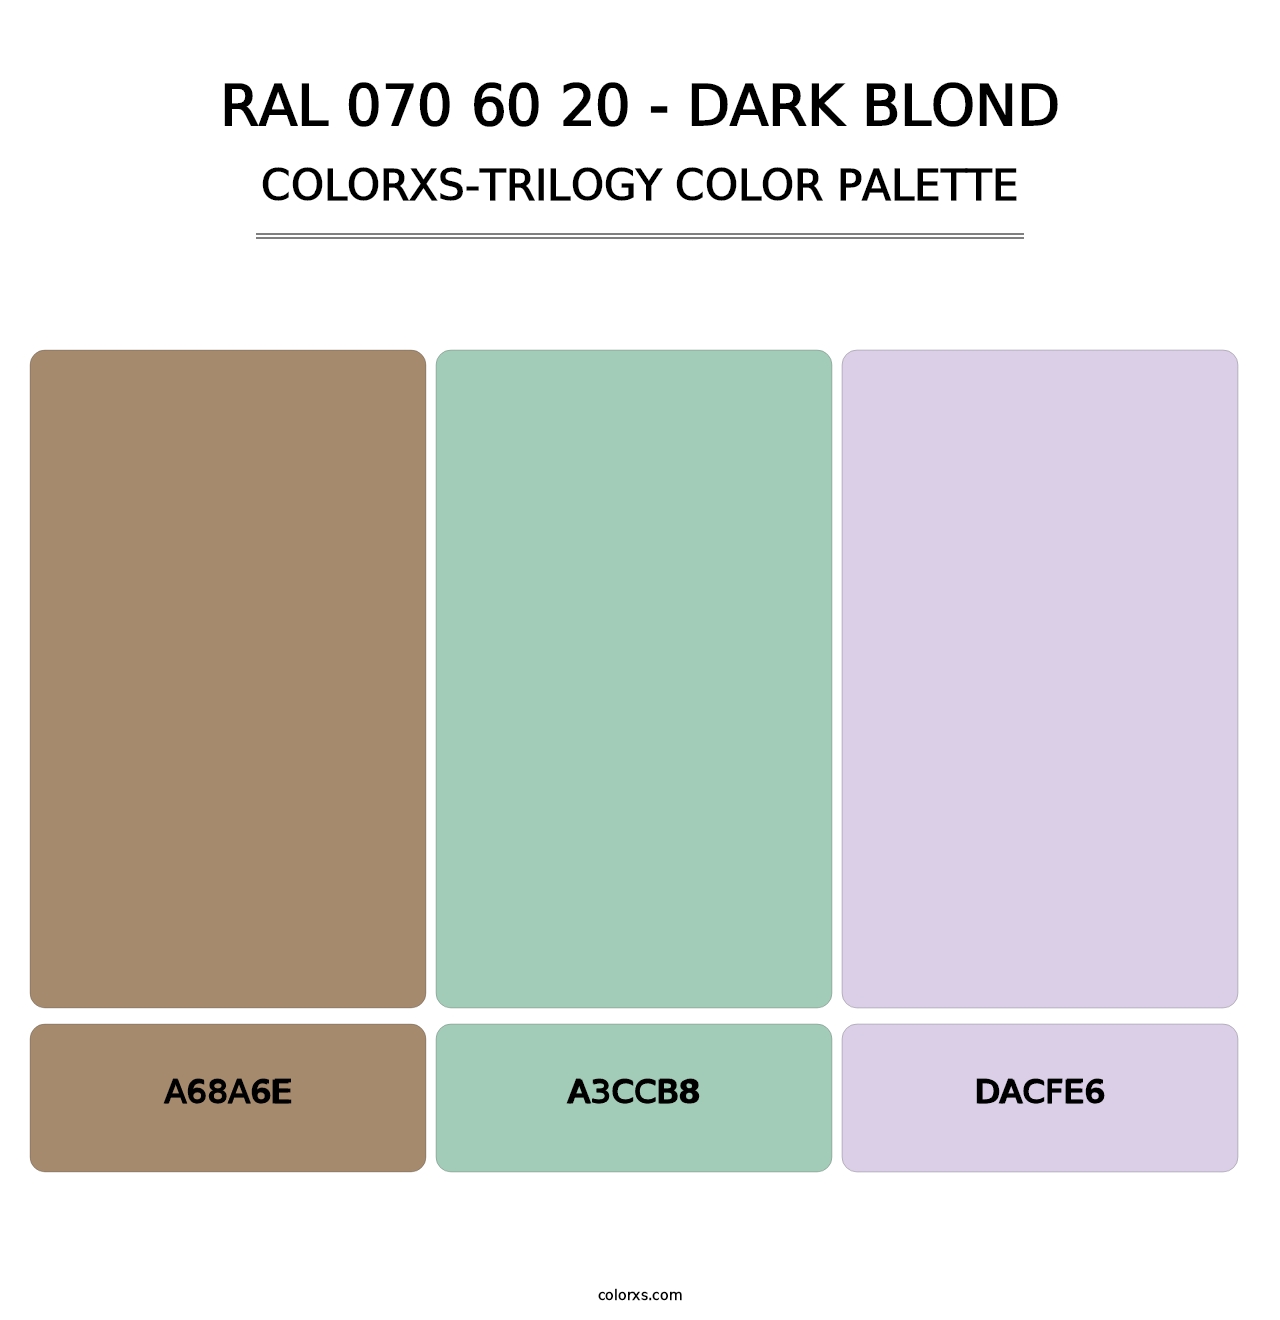 RAL 070 60 20 - Dark Blond - Colorxs Trilogy Palette